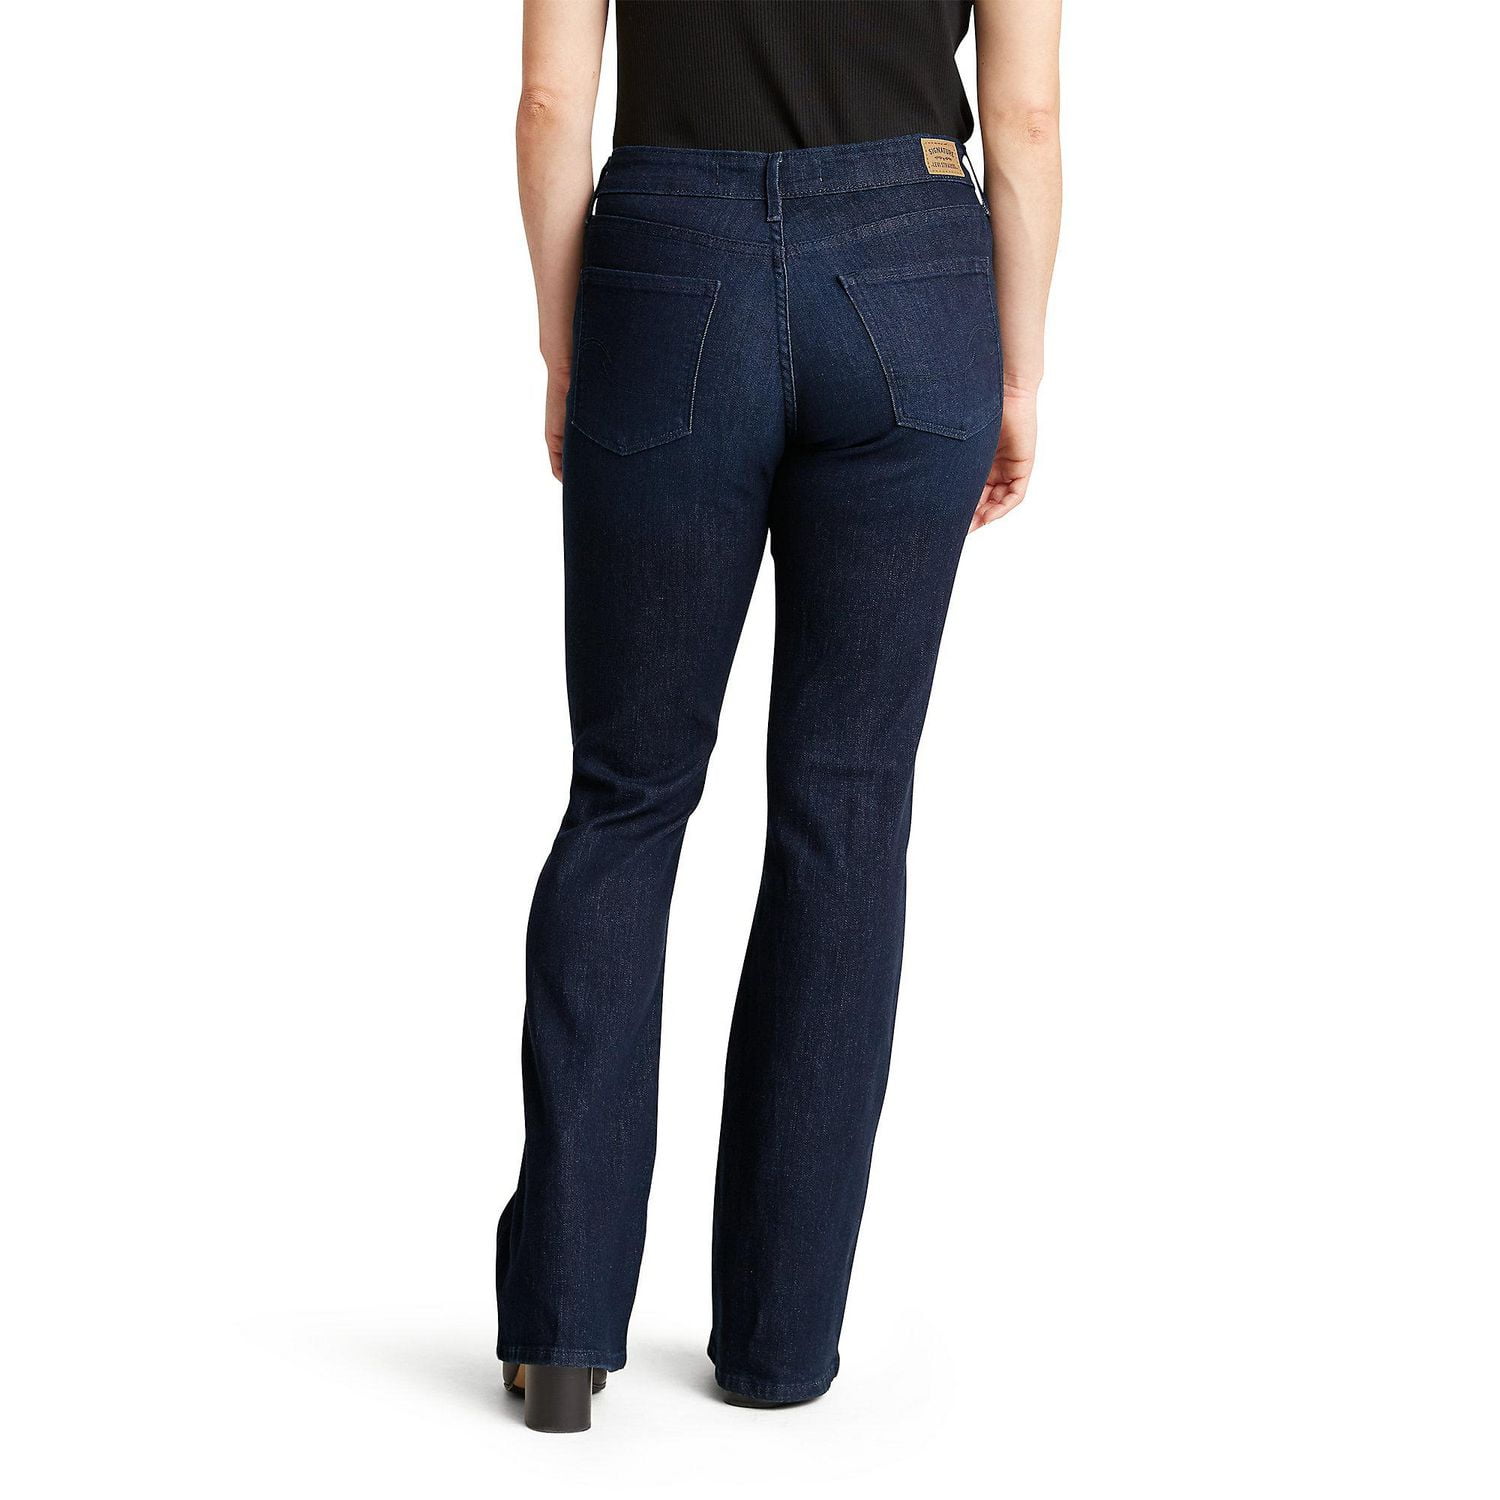 Universal Thread Women's High-Rise Bootcut Jeans - Dark Wash Size